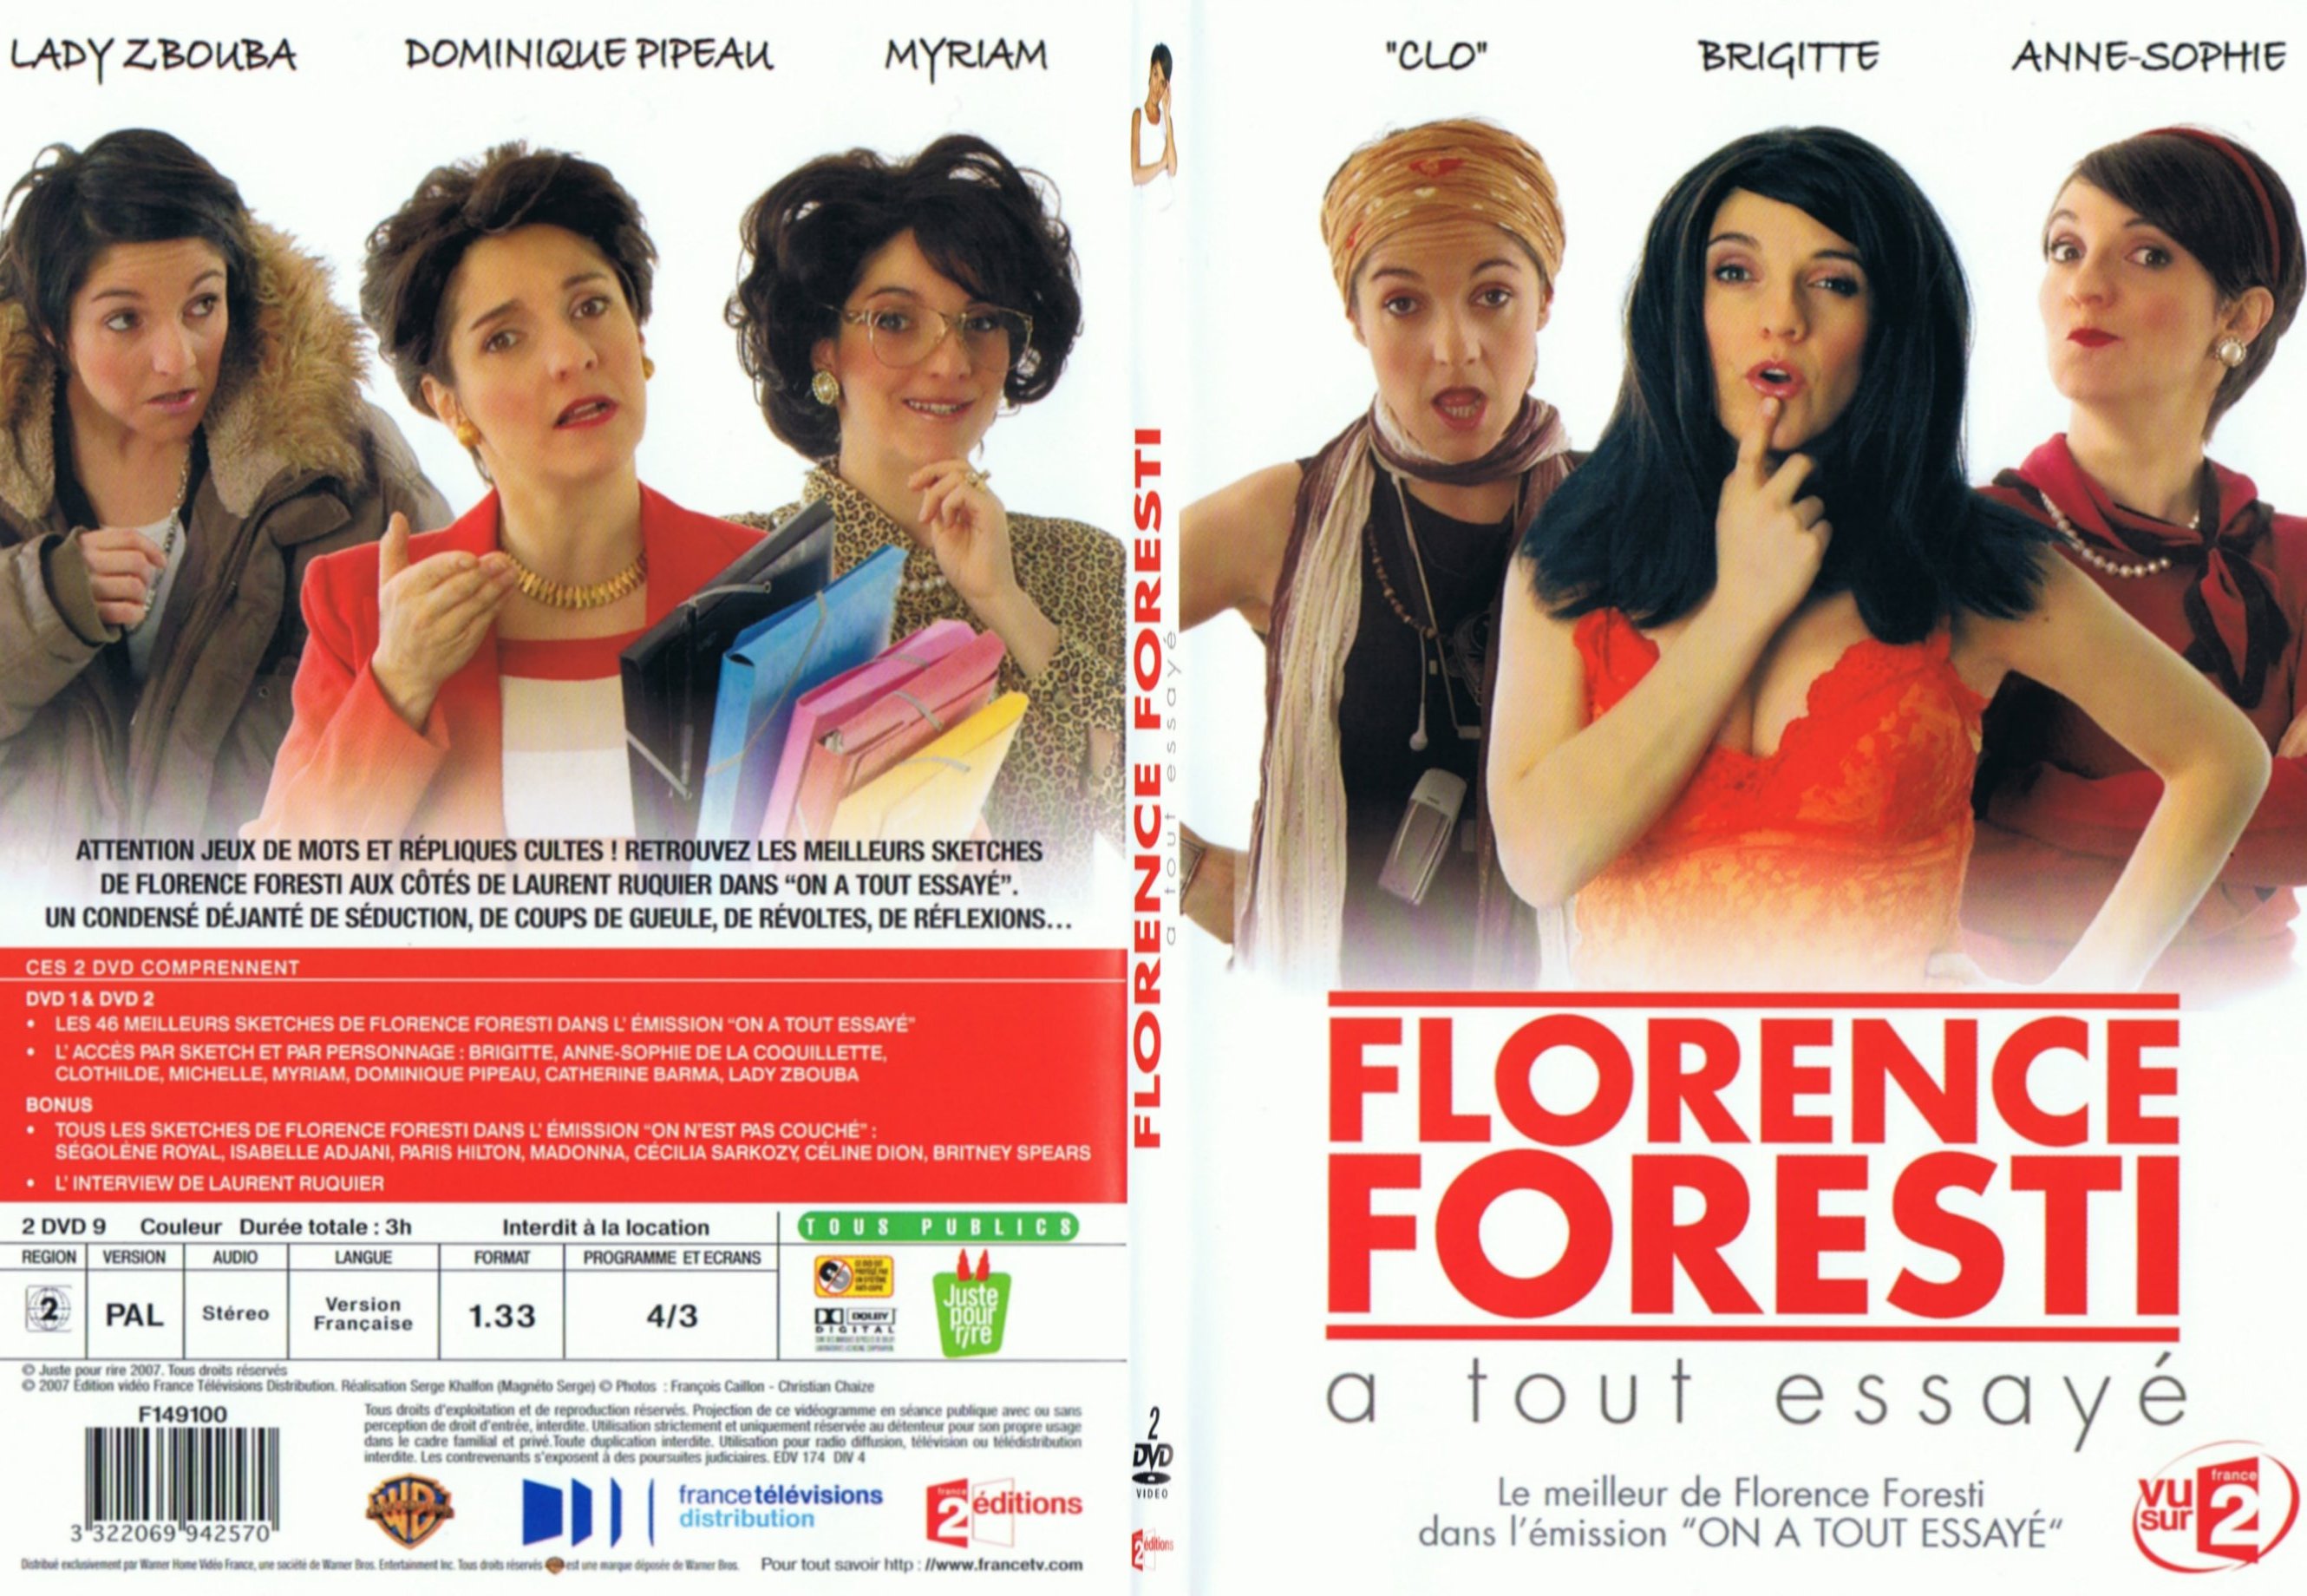 Jaquette DVD Florence Foresti a tout essay - SLIM